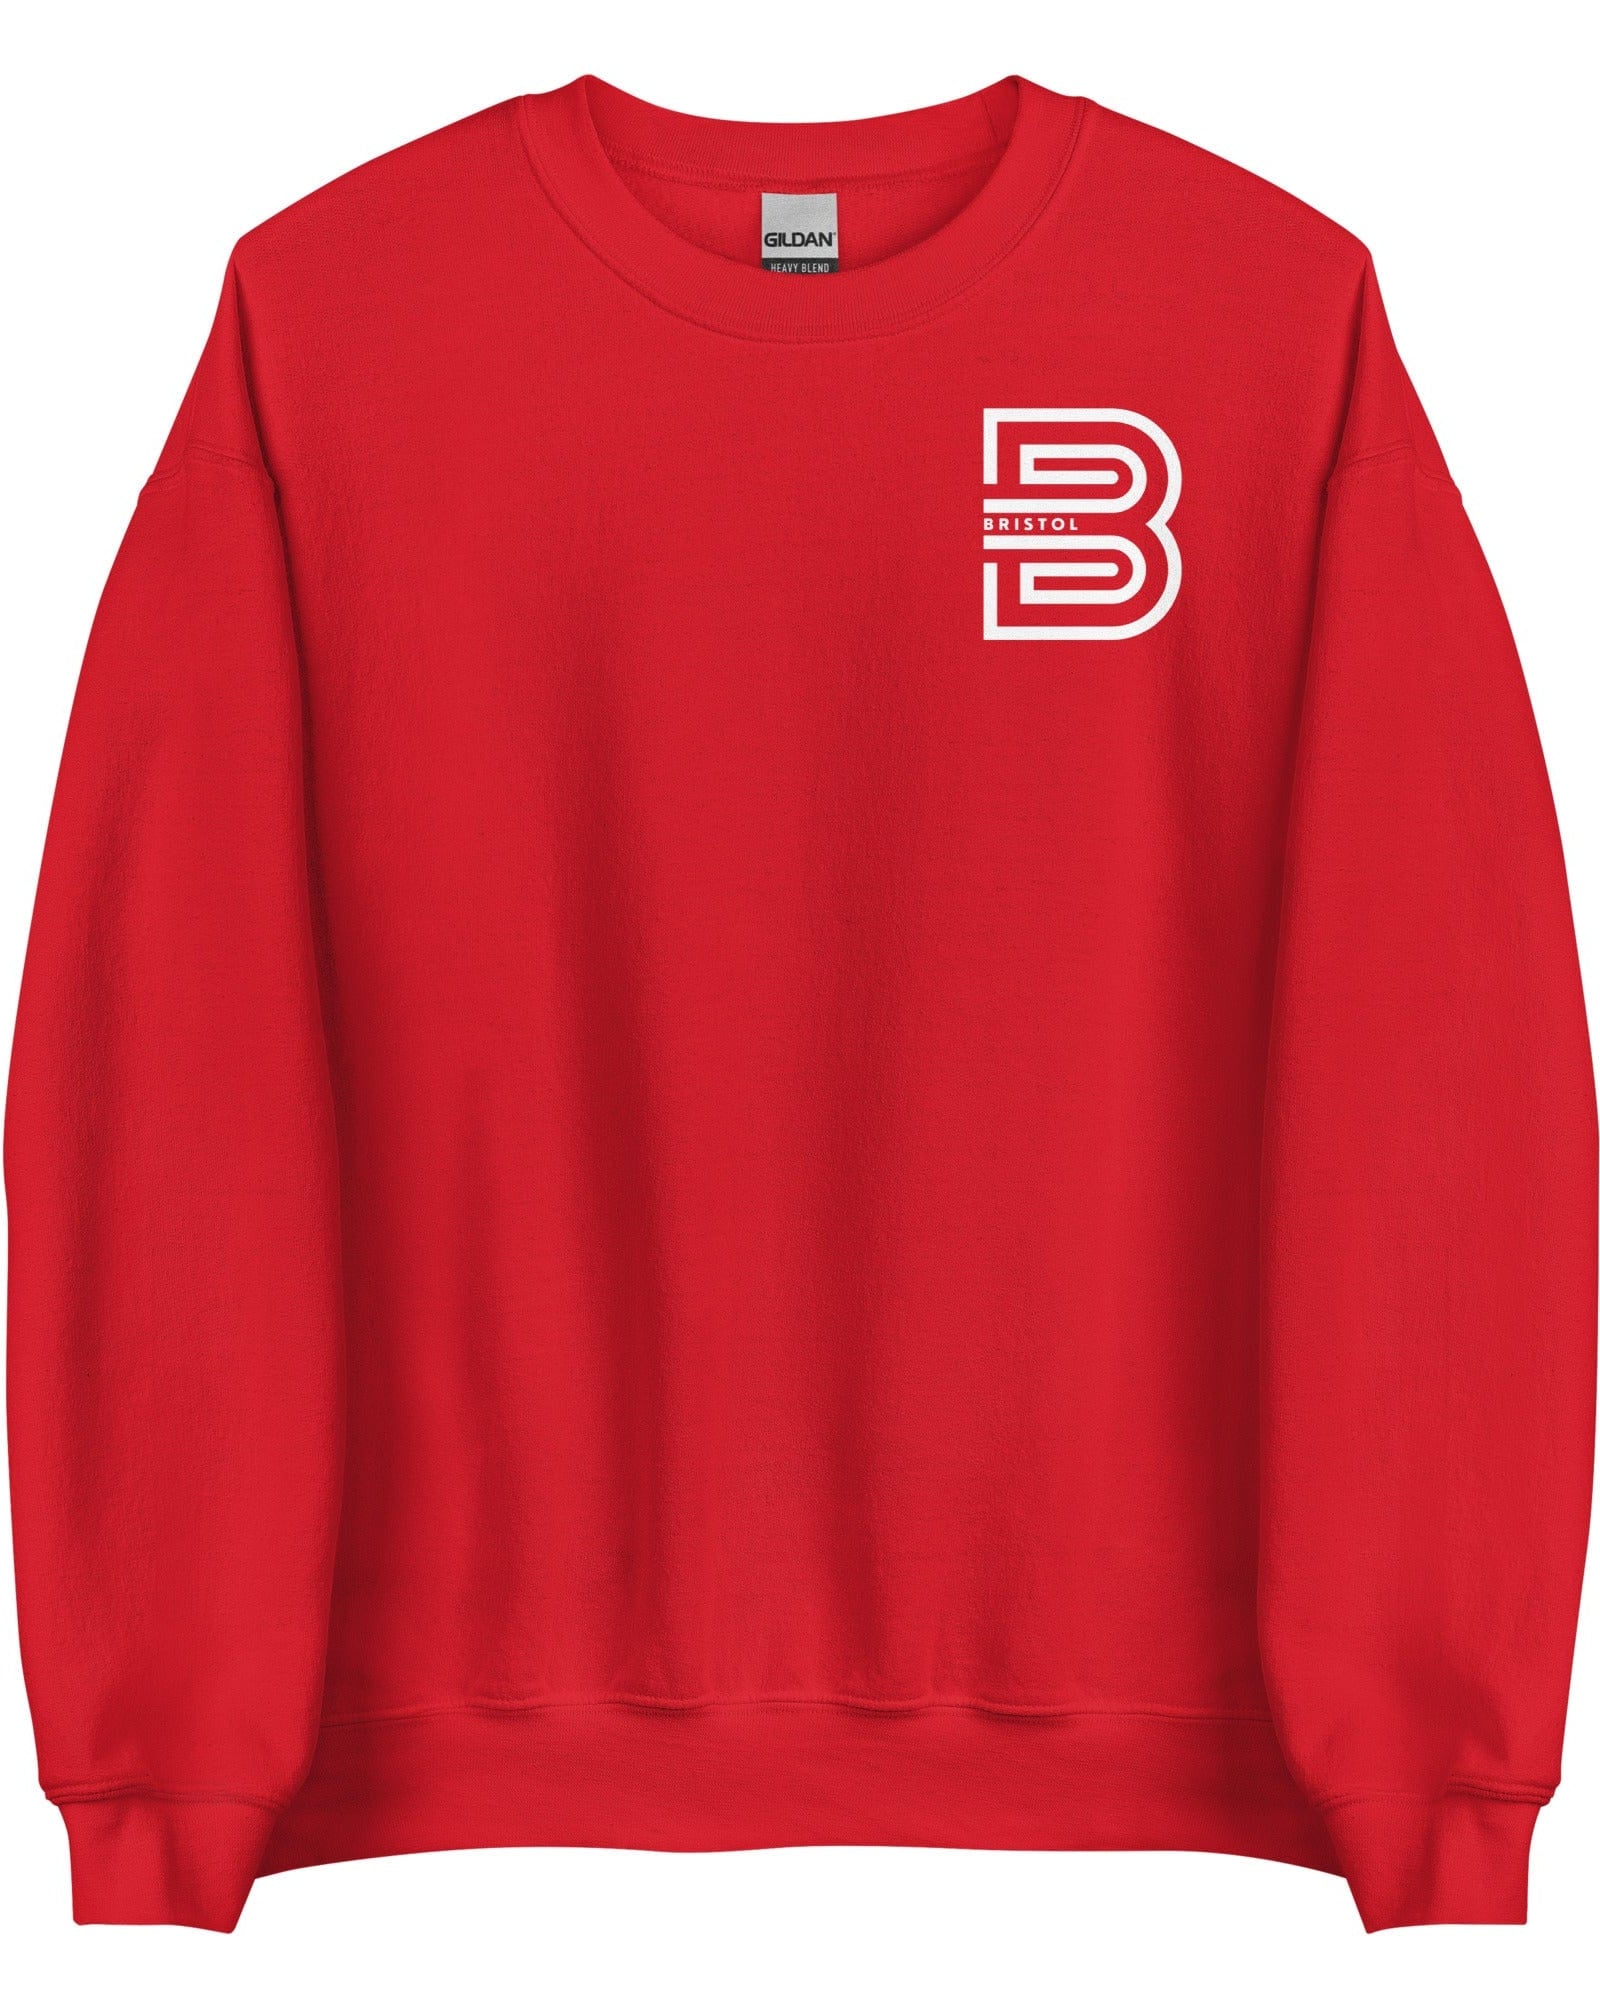 Bristol B Sweatshirt Red / S Sweatshirt Jolly & Goode